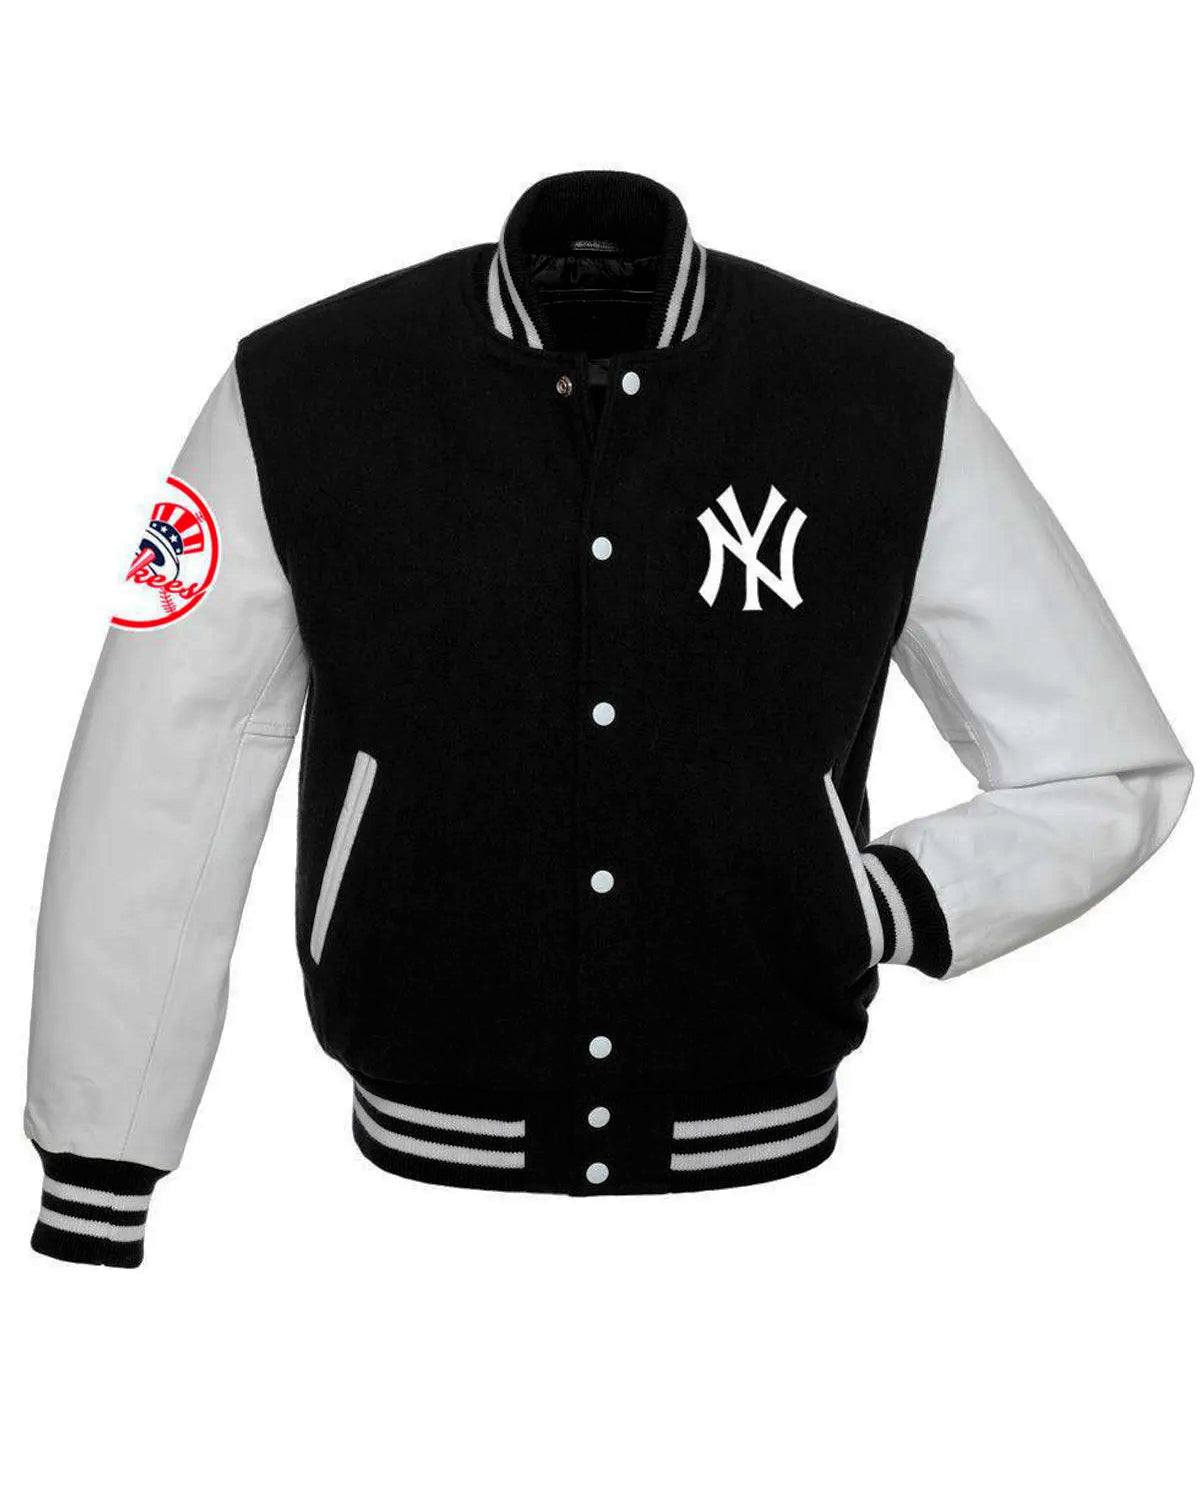 NY Yankees Black And White Varsity Jacket 